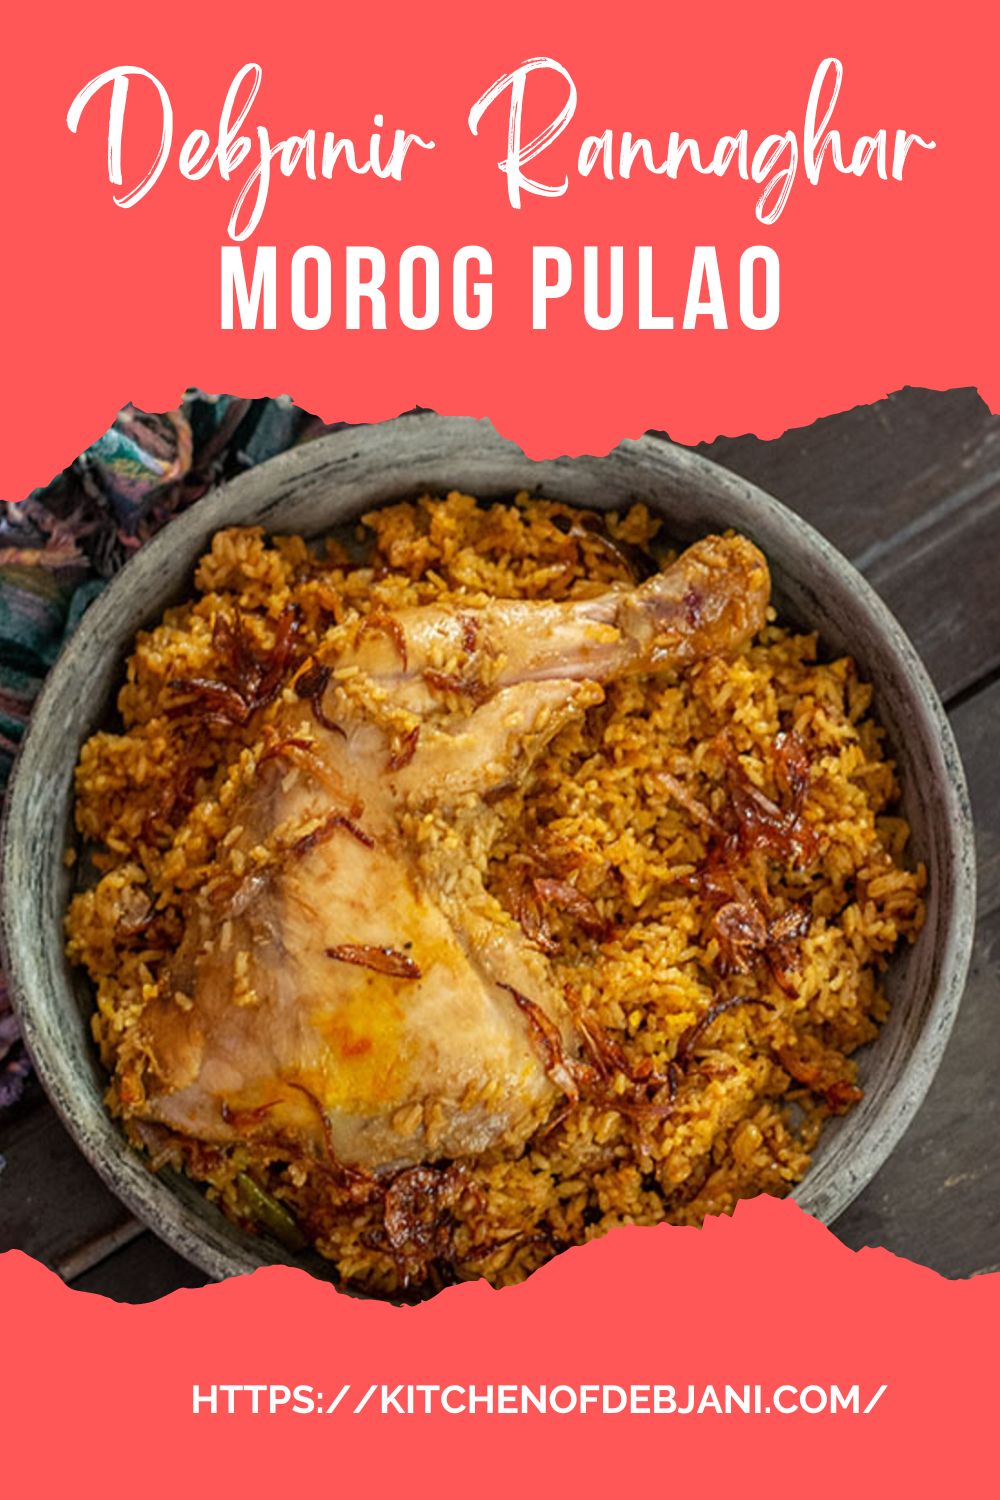 %Bengali Morog Pulao recipe debjanir rannaghar Pinterest Pin